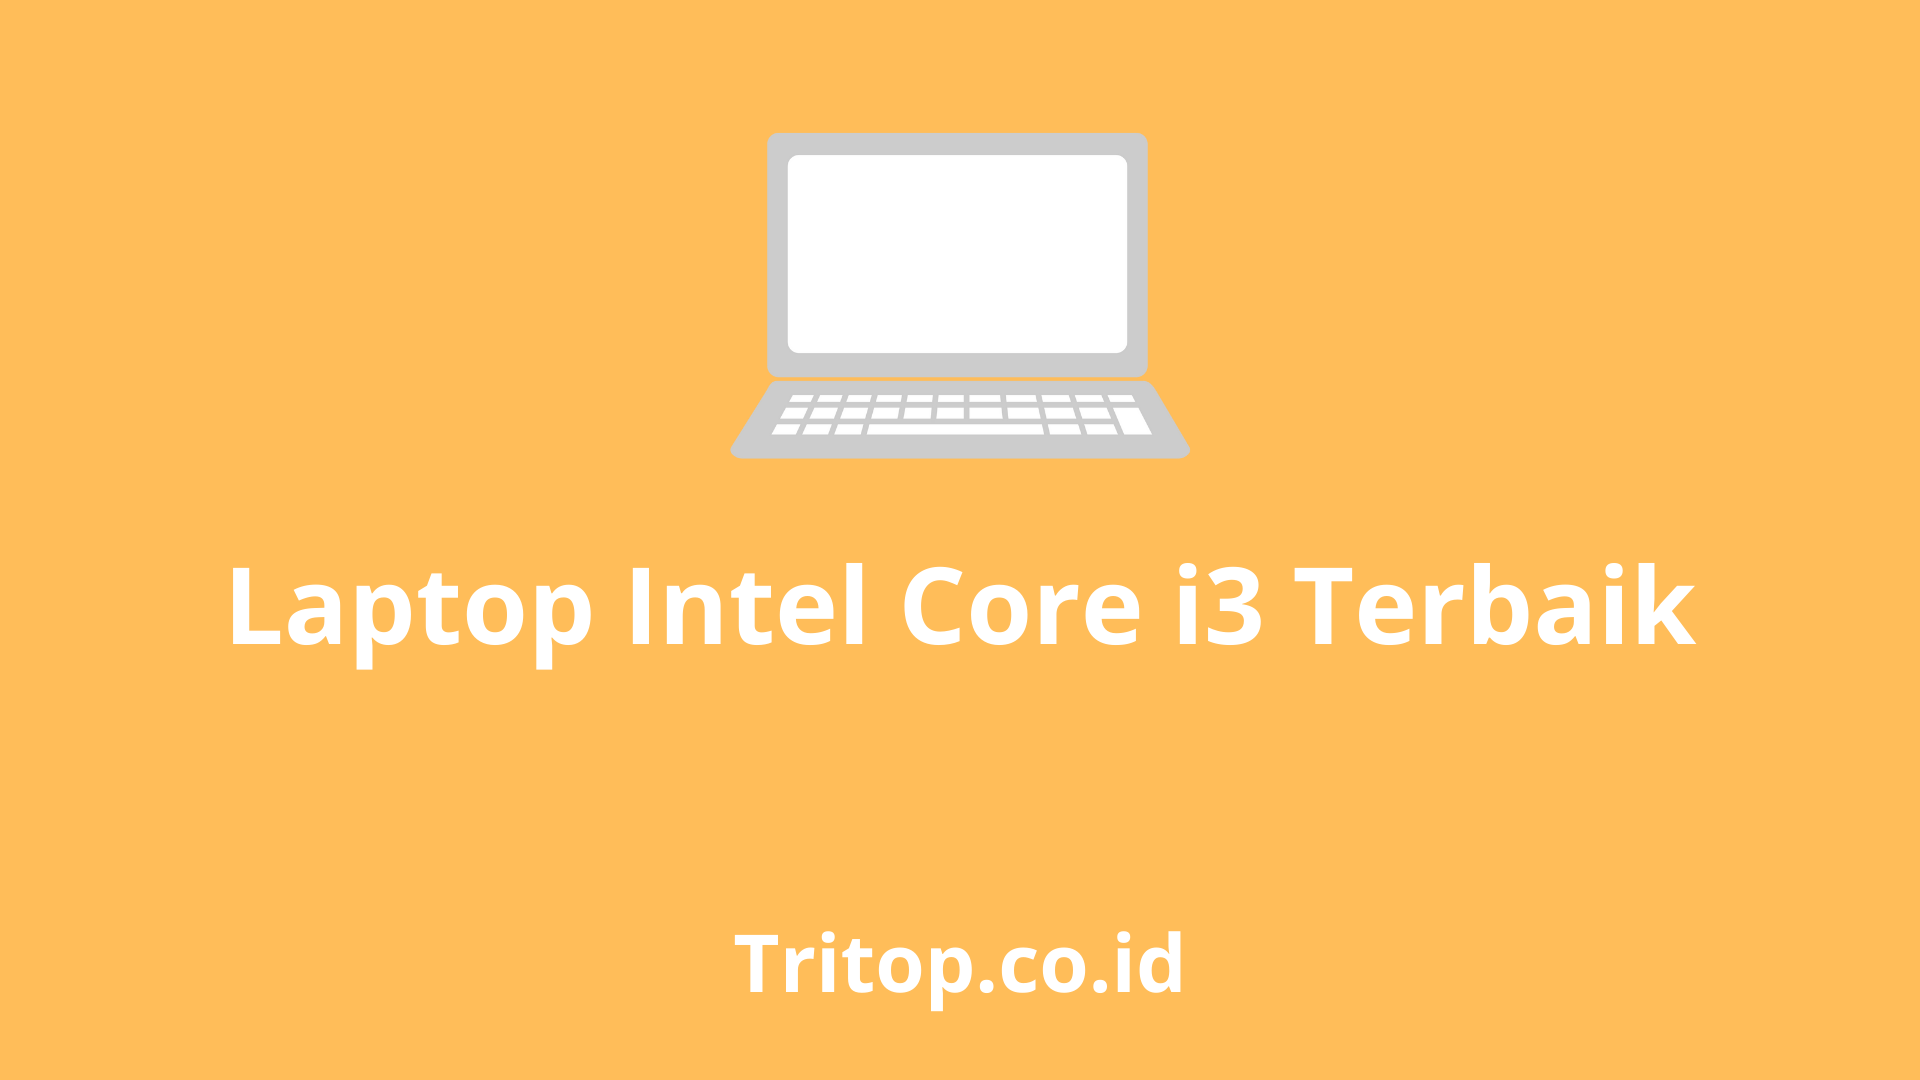 Laptop Intel Core i3 Terbaik tritop.co.id